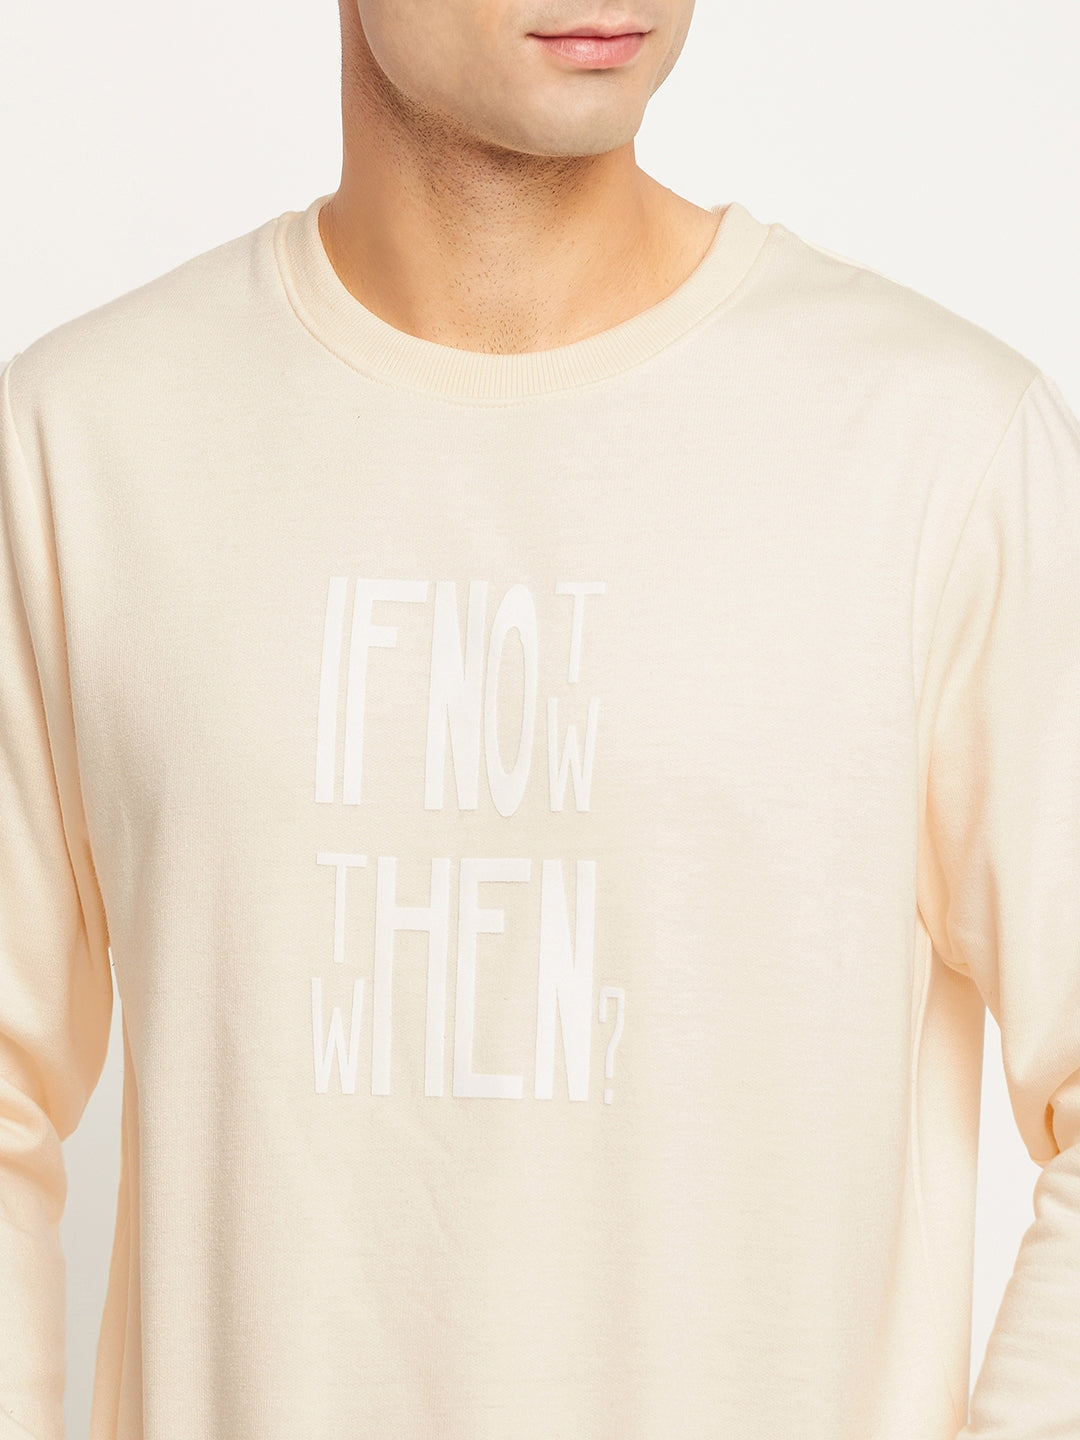 Men's Sweatshirt Off-White